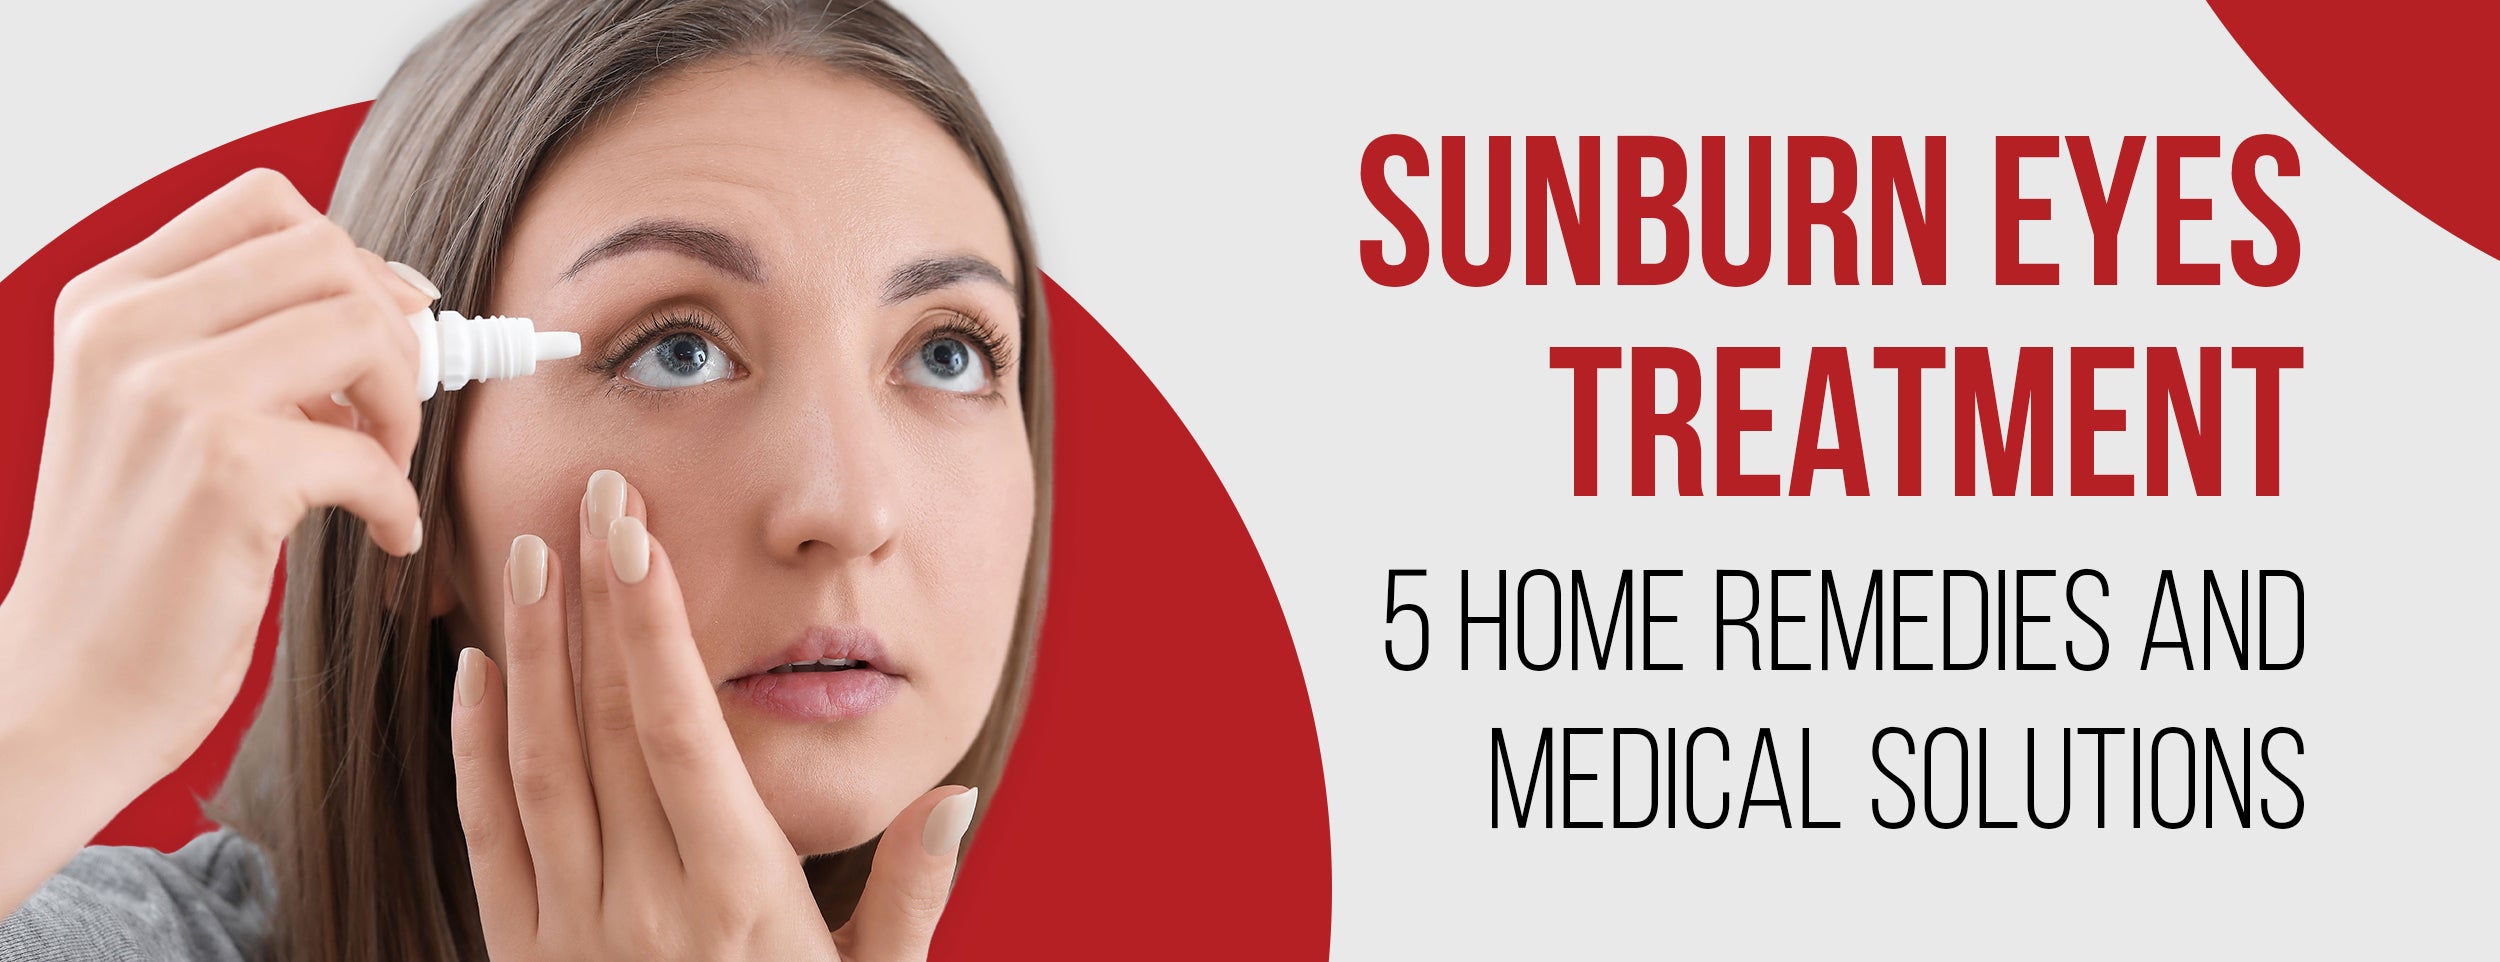 Home Remedies & Medical Solutions for Sunburned Eyes